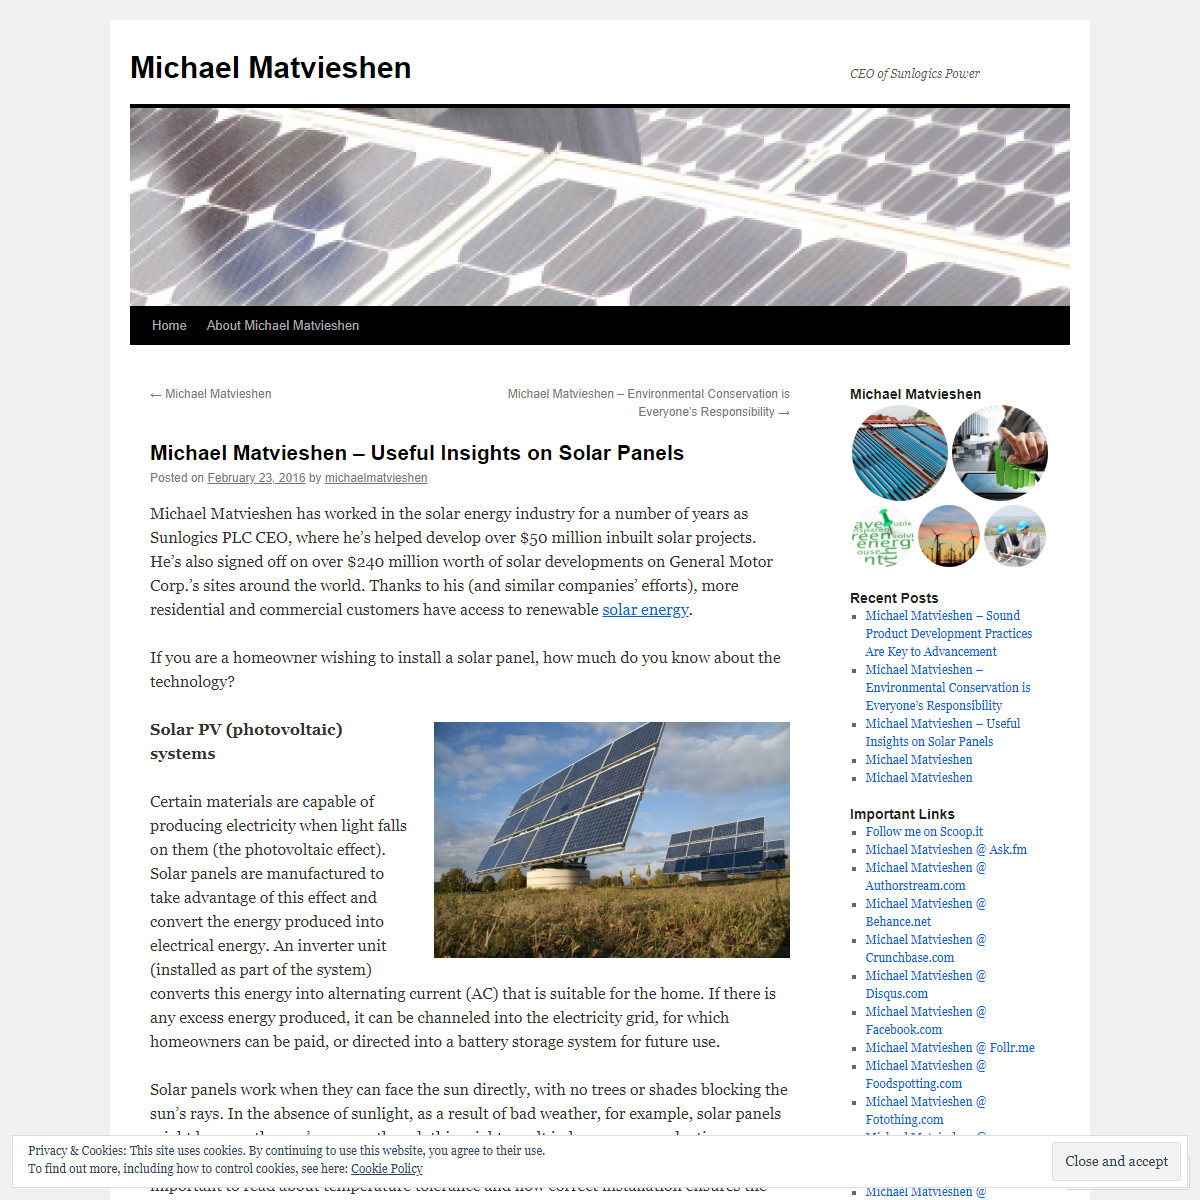 A complete backup of https://michaelmatvieshen.wordpress.com/2016/02/23/michael-matvieshen-useful-insights-on-solar-panels/